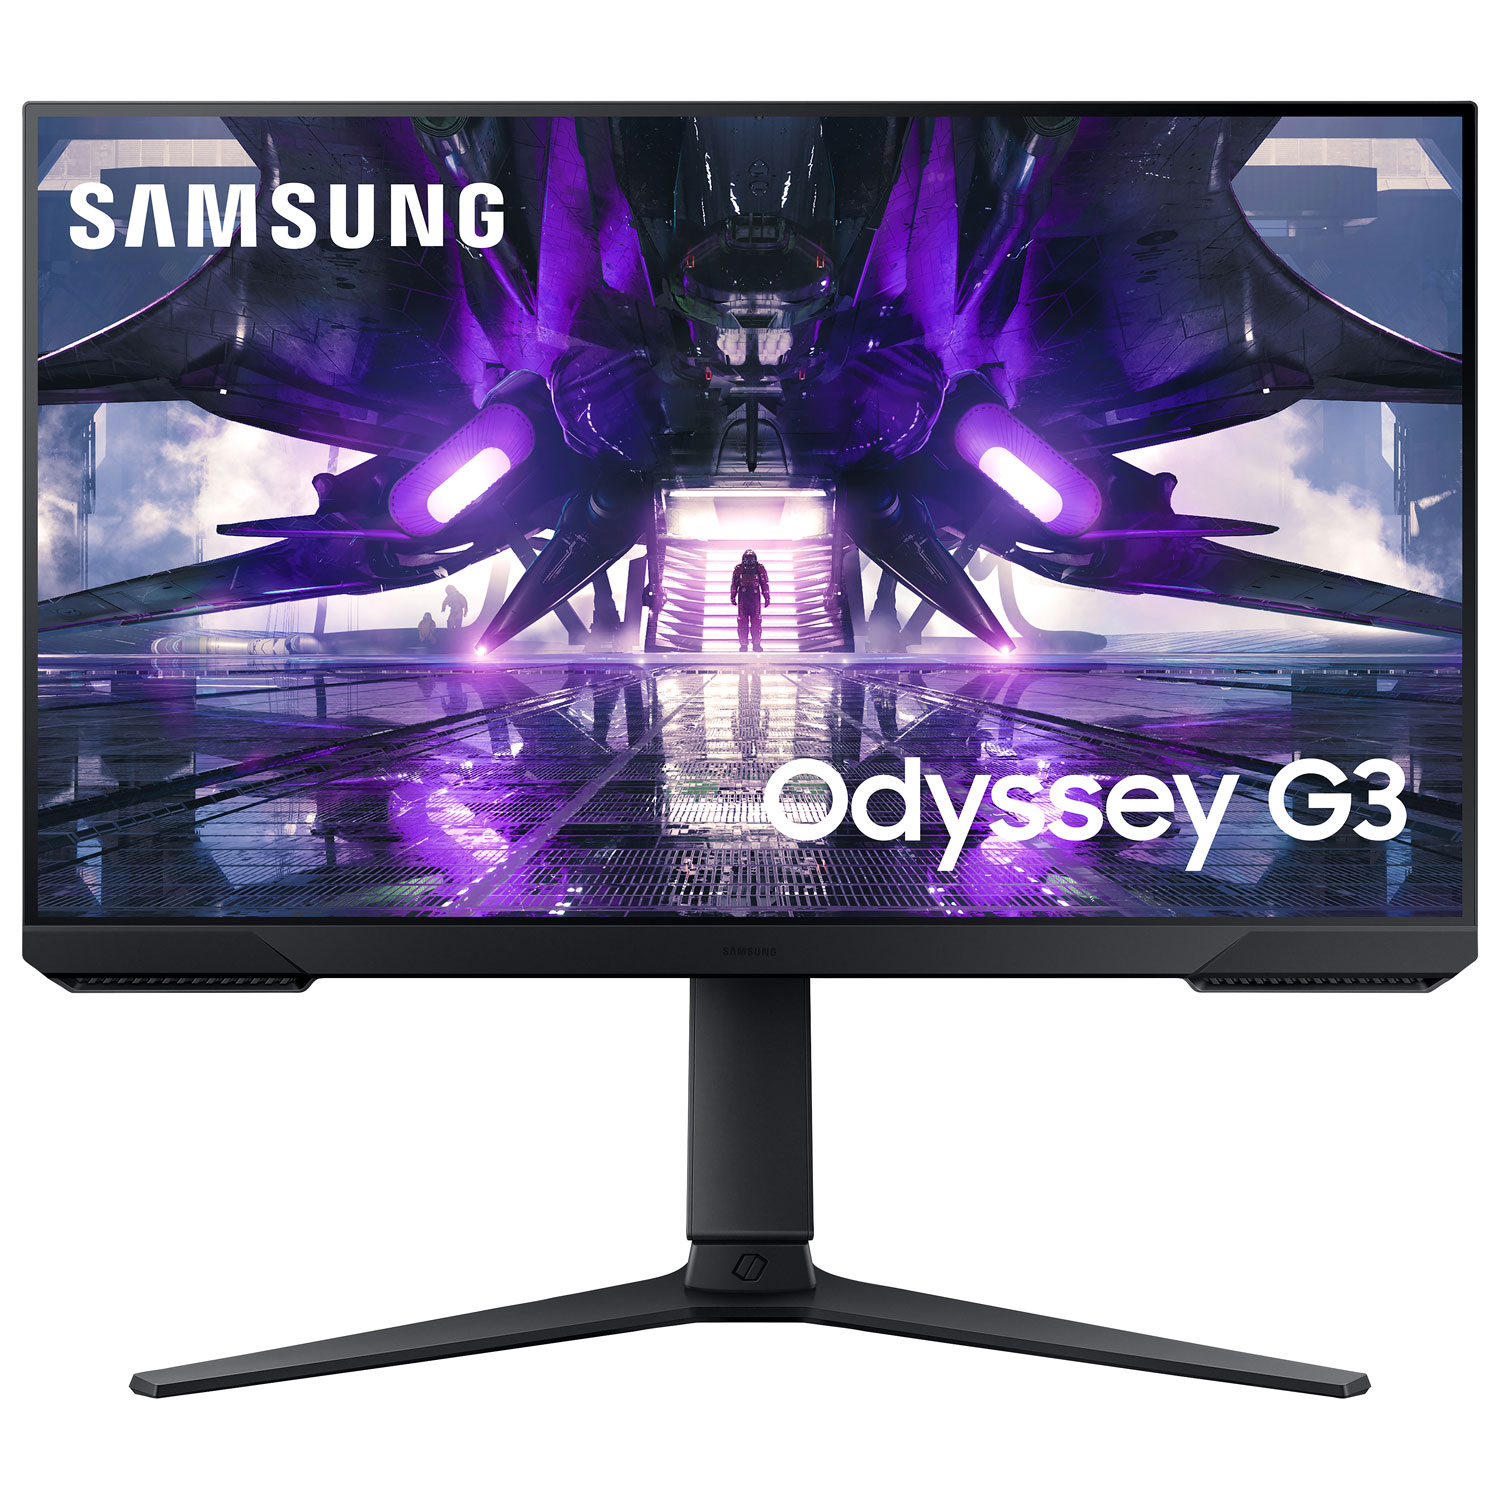 Samsung 24" FHD 144Hz 1ms GTG Curved VA LCD FreeSync Gaming Monitor (LC24RG50FZNXZA) - Black